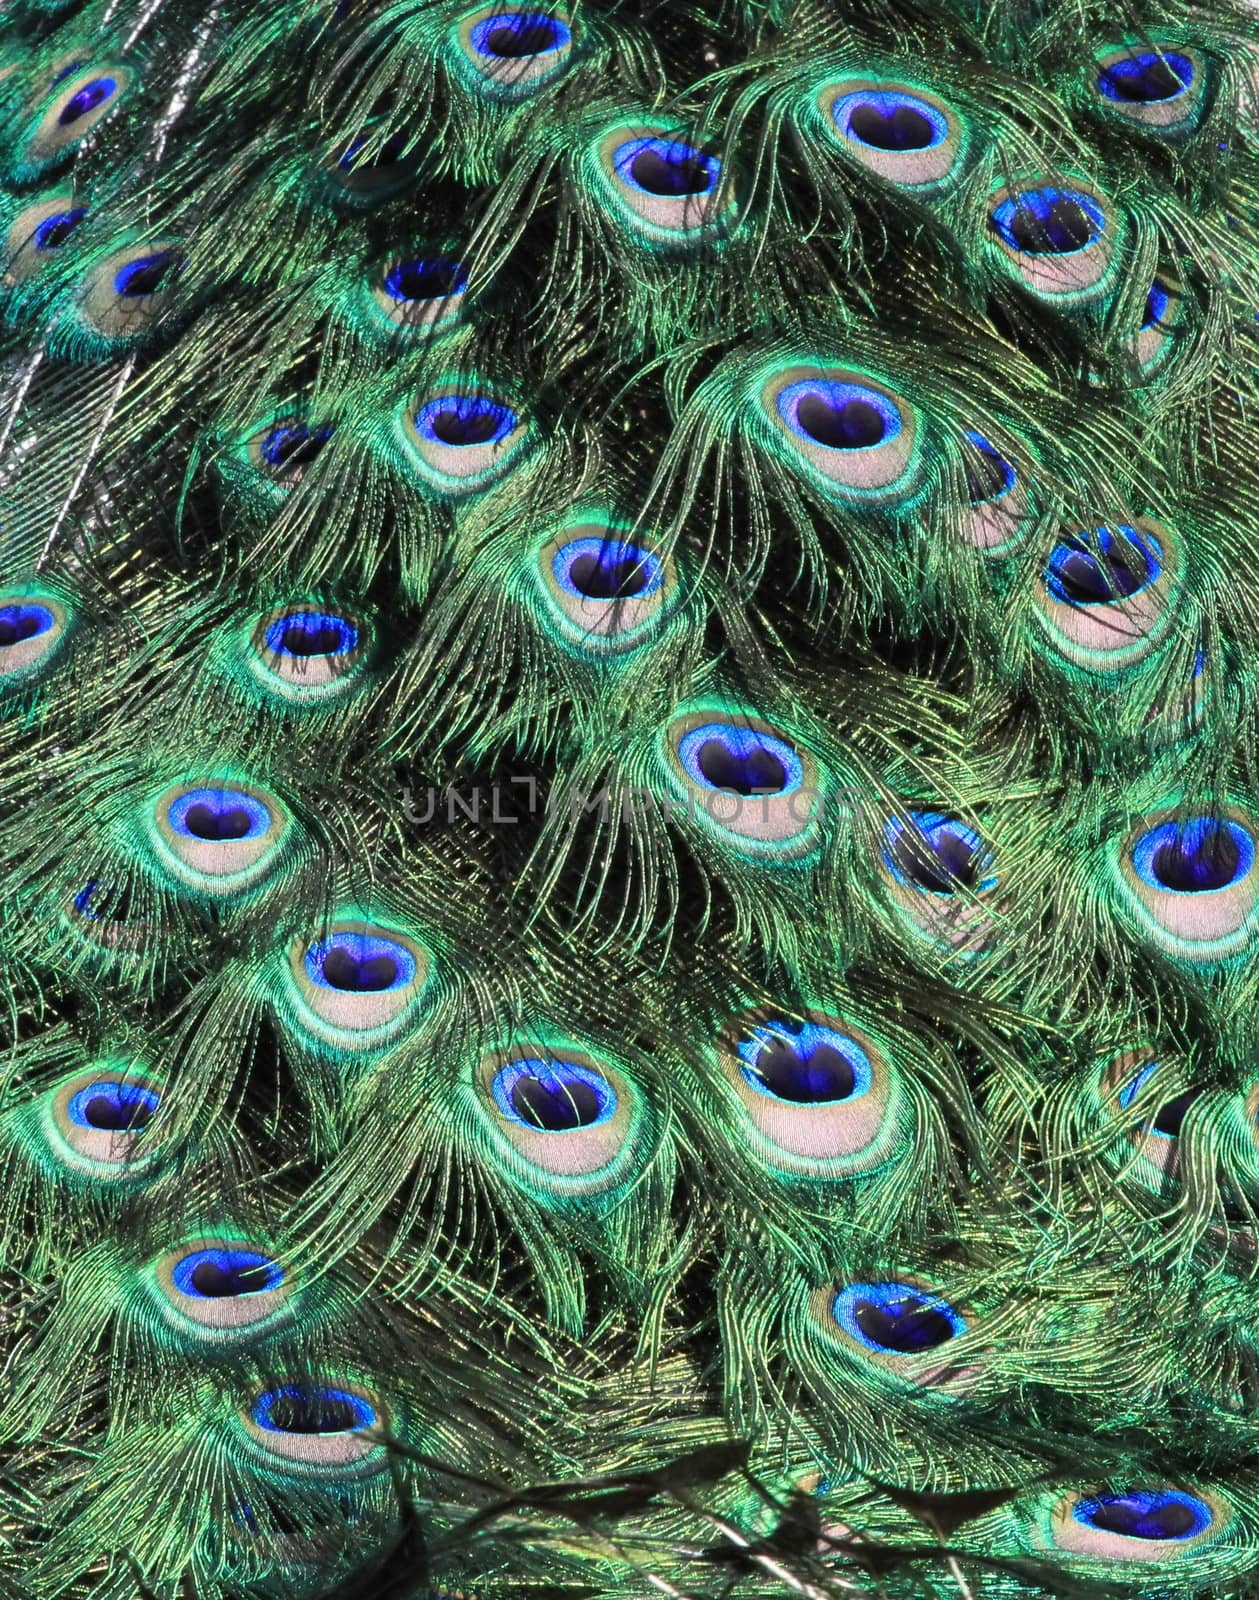 Peacock tail by Elenaphotos21